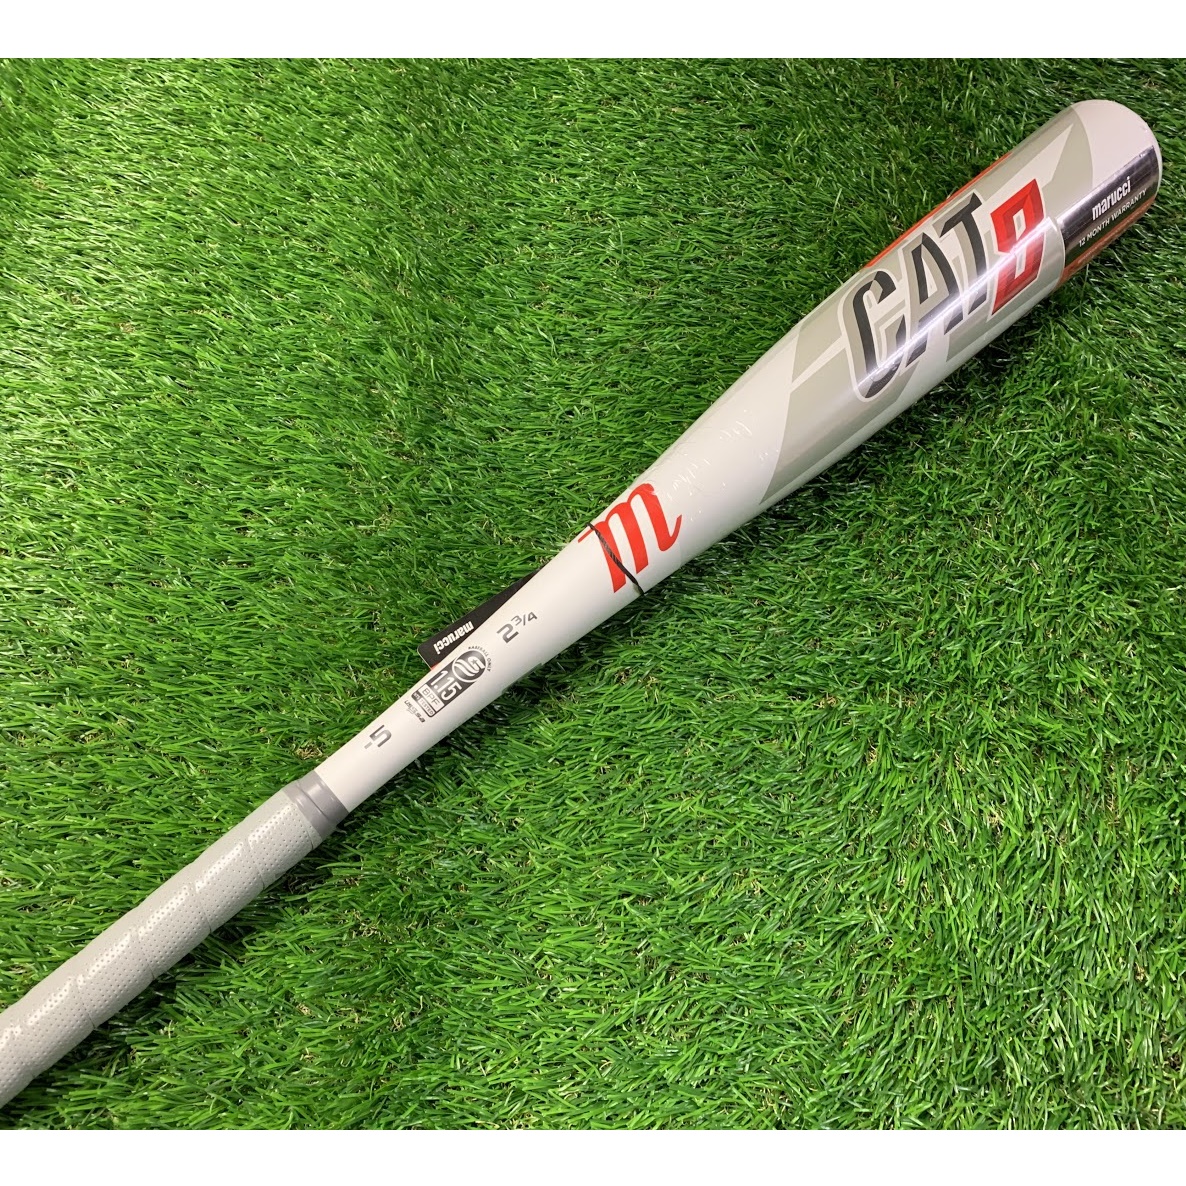 marucci-cat-8-baseball-bat-31-inch-26-oz-demo MSBC85-3126-DEMO Marucci  Demo bats are a great opportunity to pick up a high